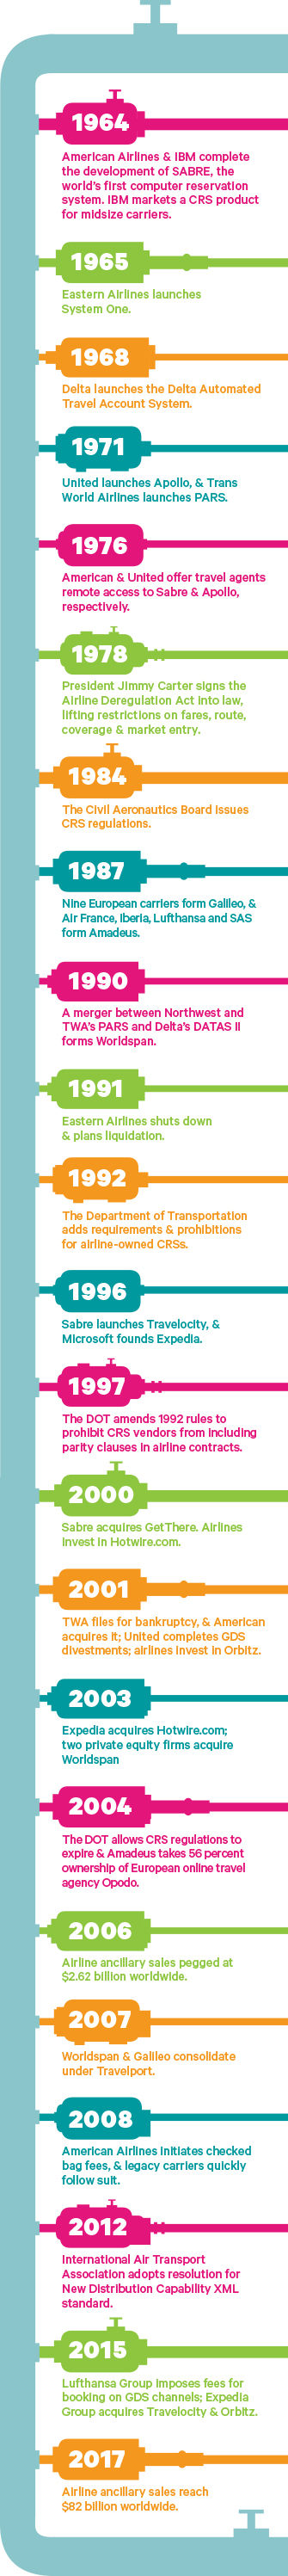 Air Distribution Timeline